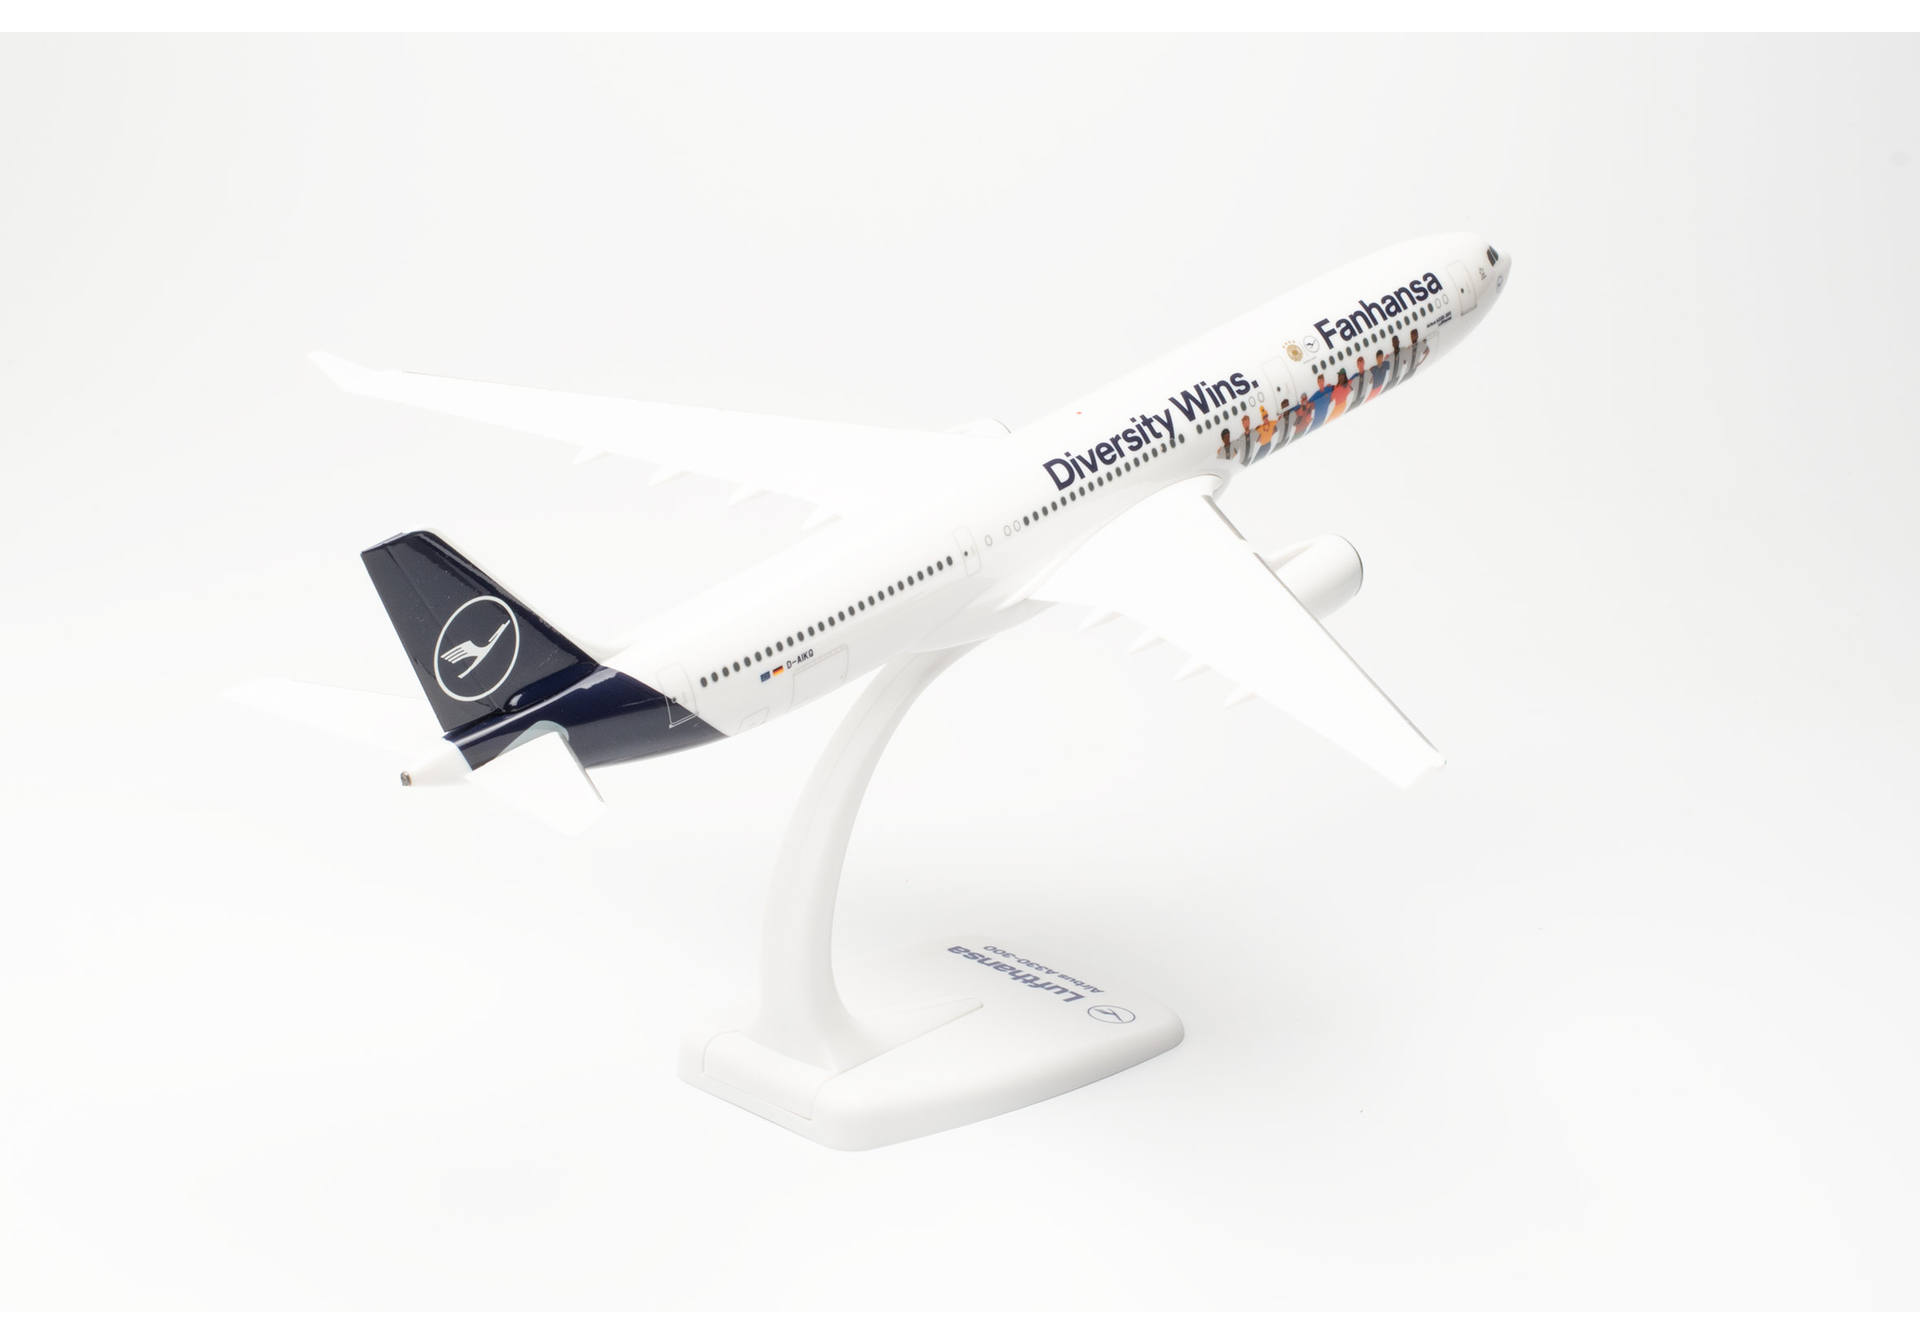 Lufthansa Airbus A330-300 "Fanhansa - Diversity Wins" - D-AIKQ